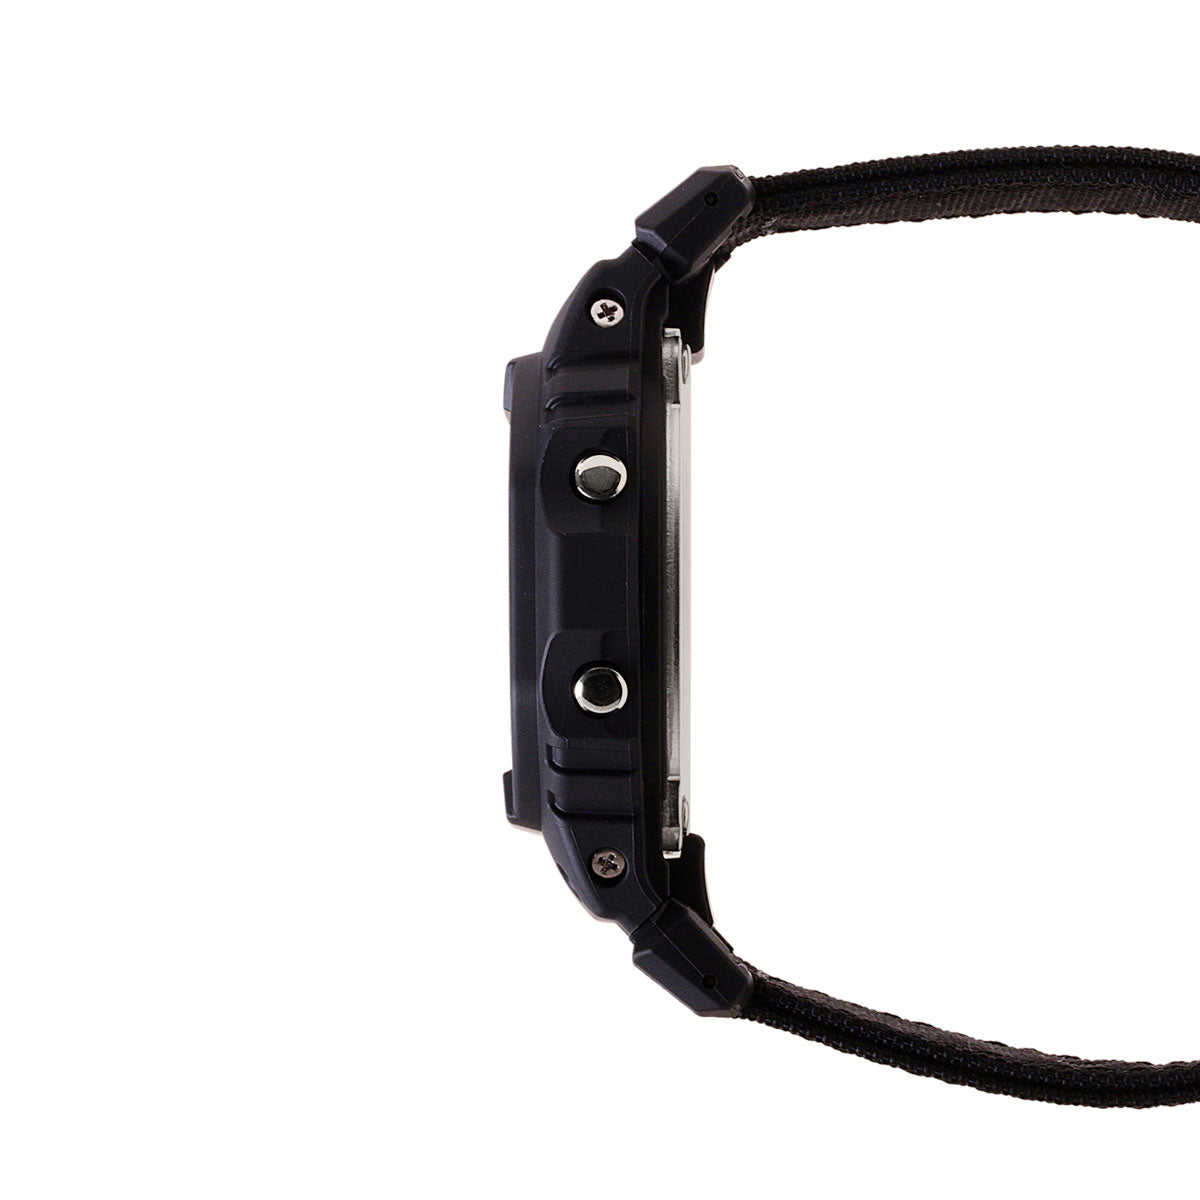 G-Shock DW5600BCE-1 Watch - Black image 4